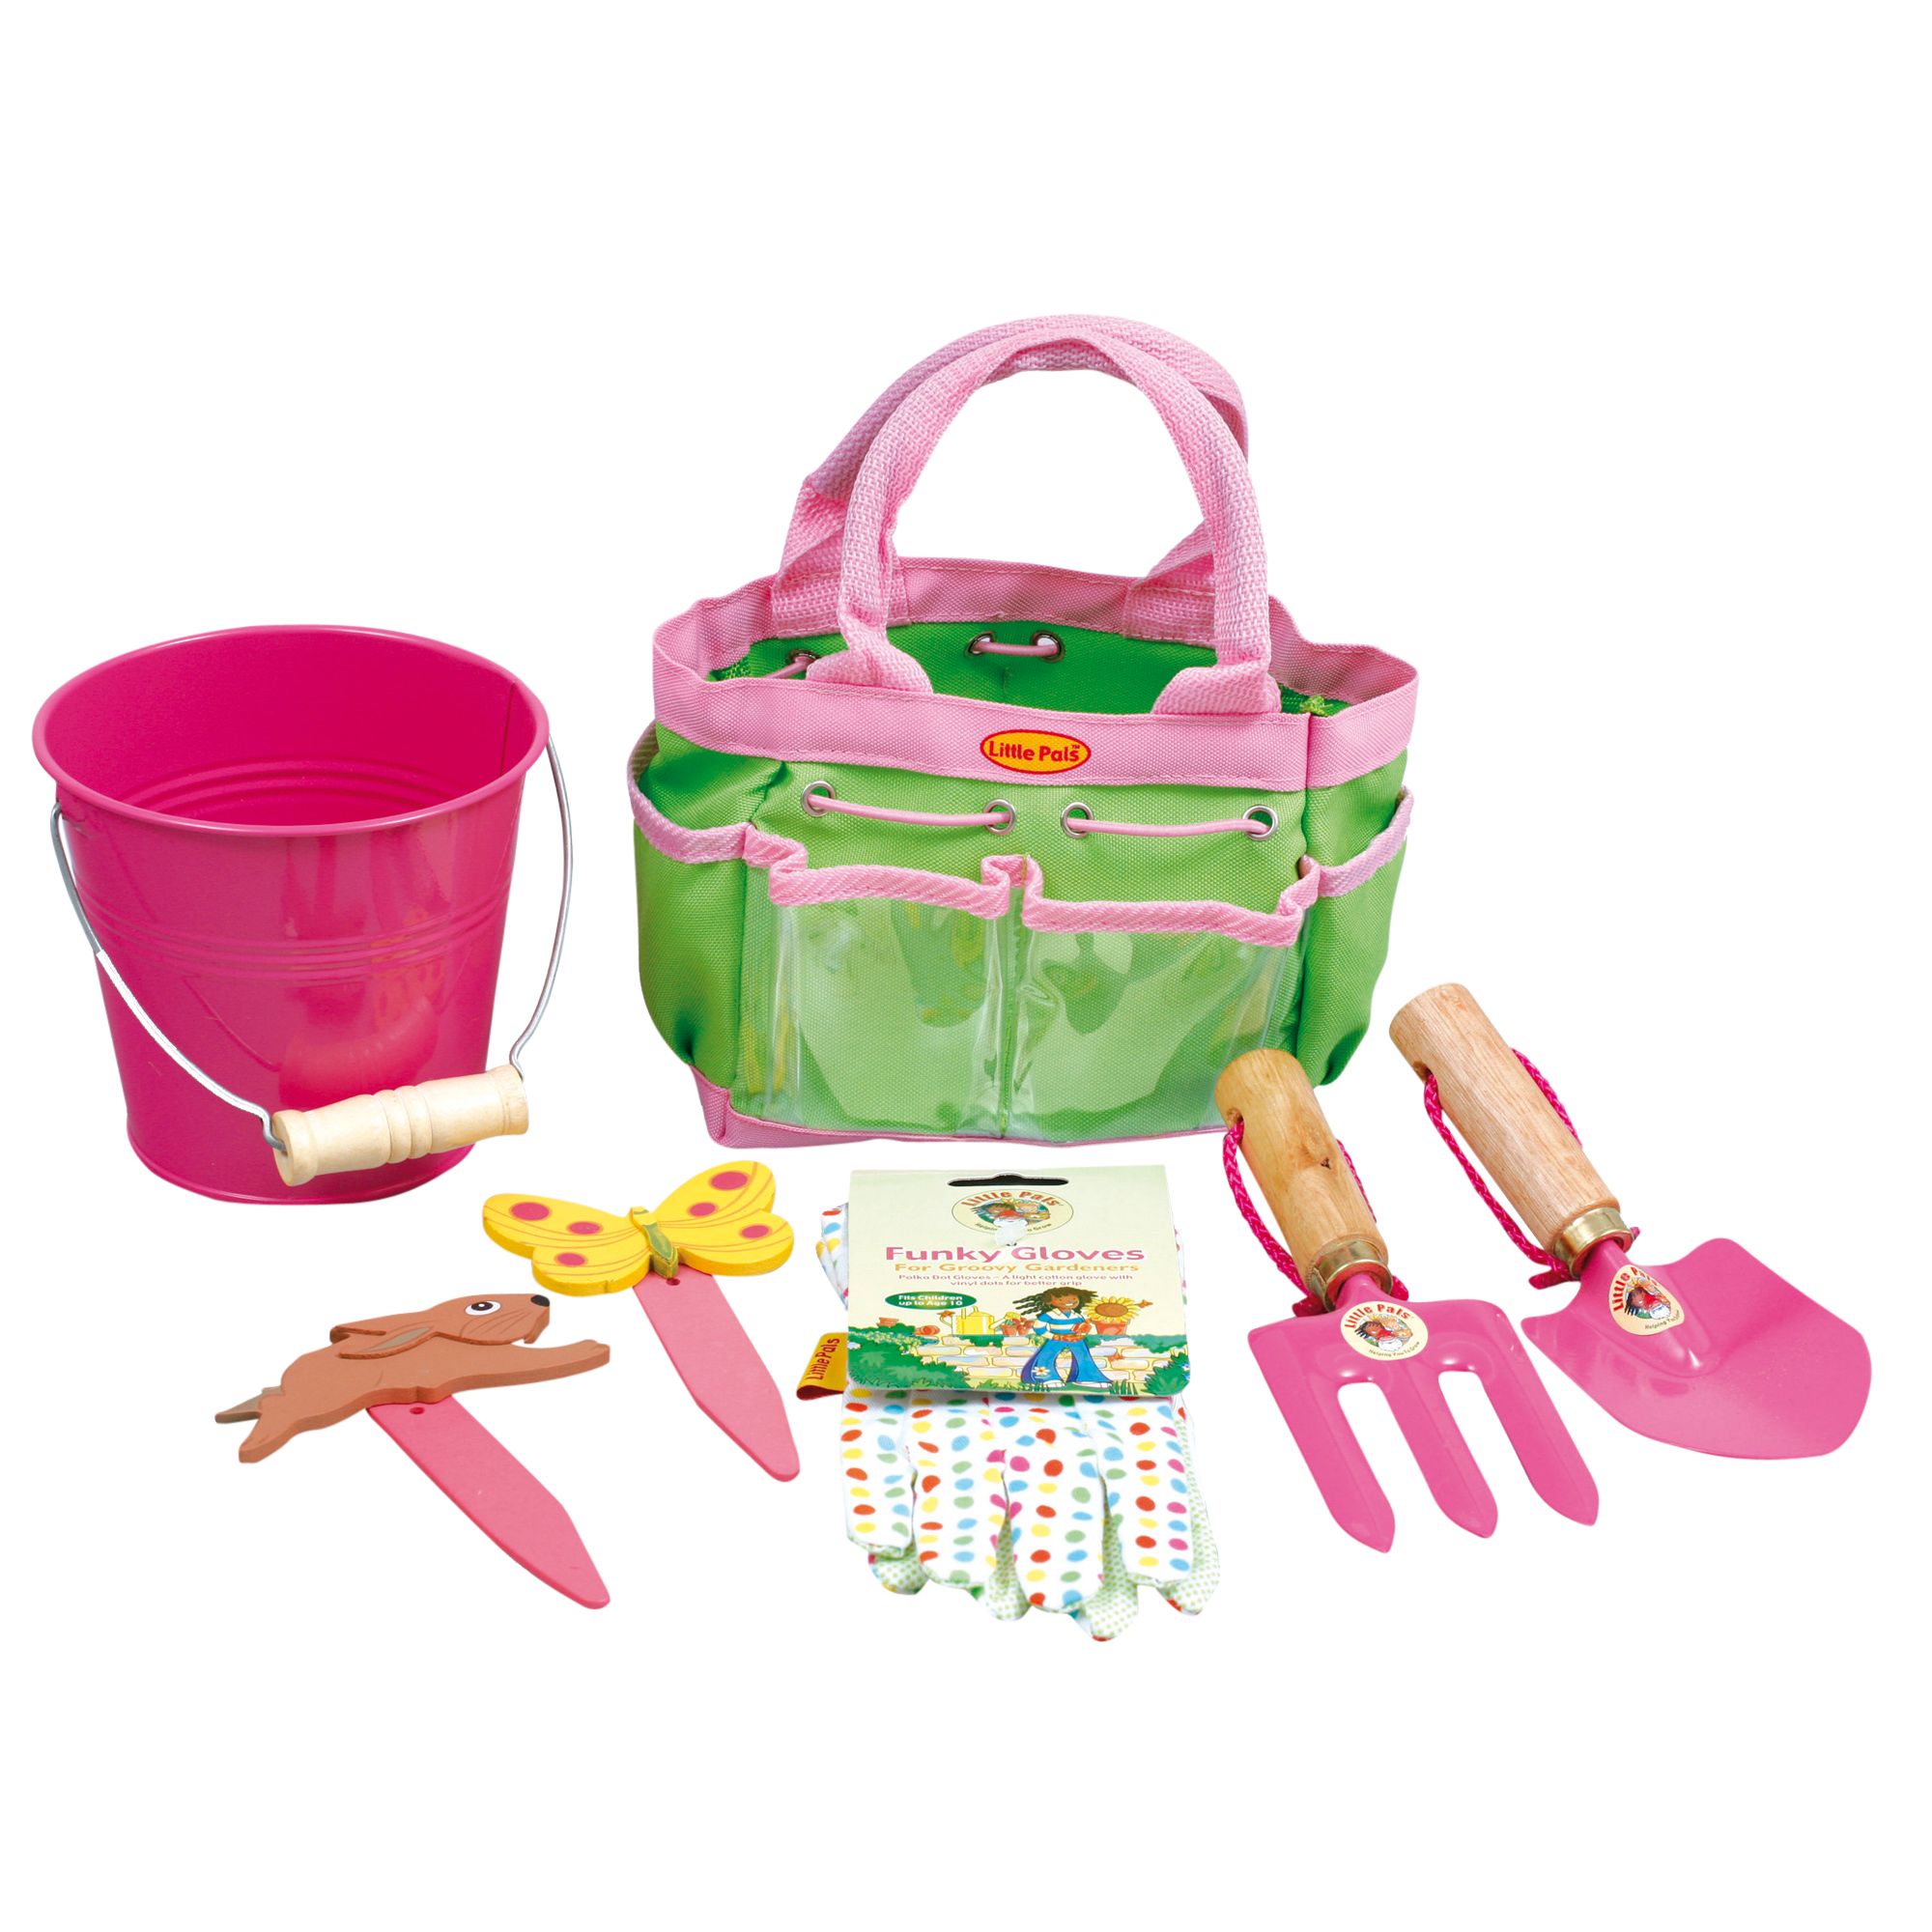 Unbranded Garden Tool Kit, Pink